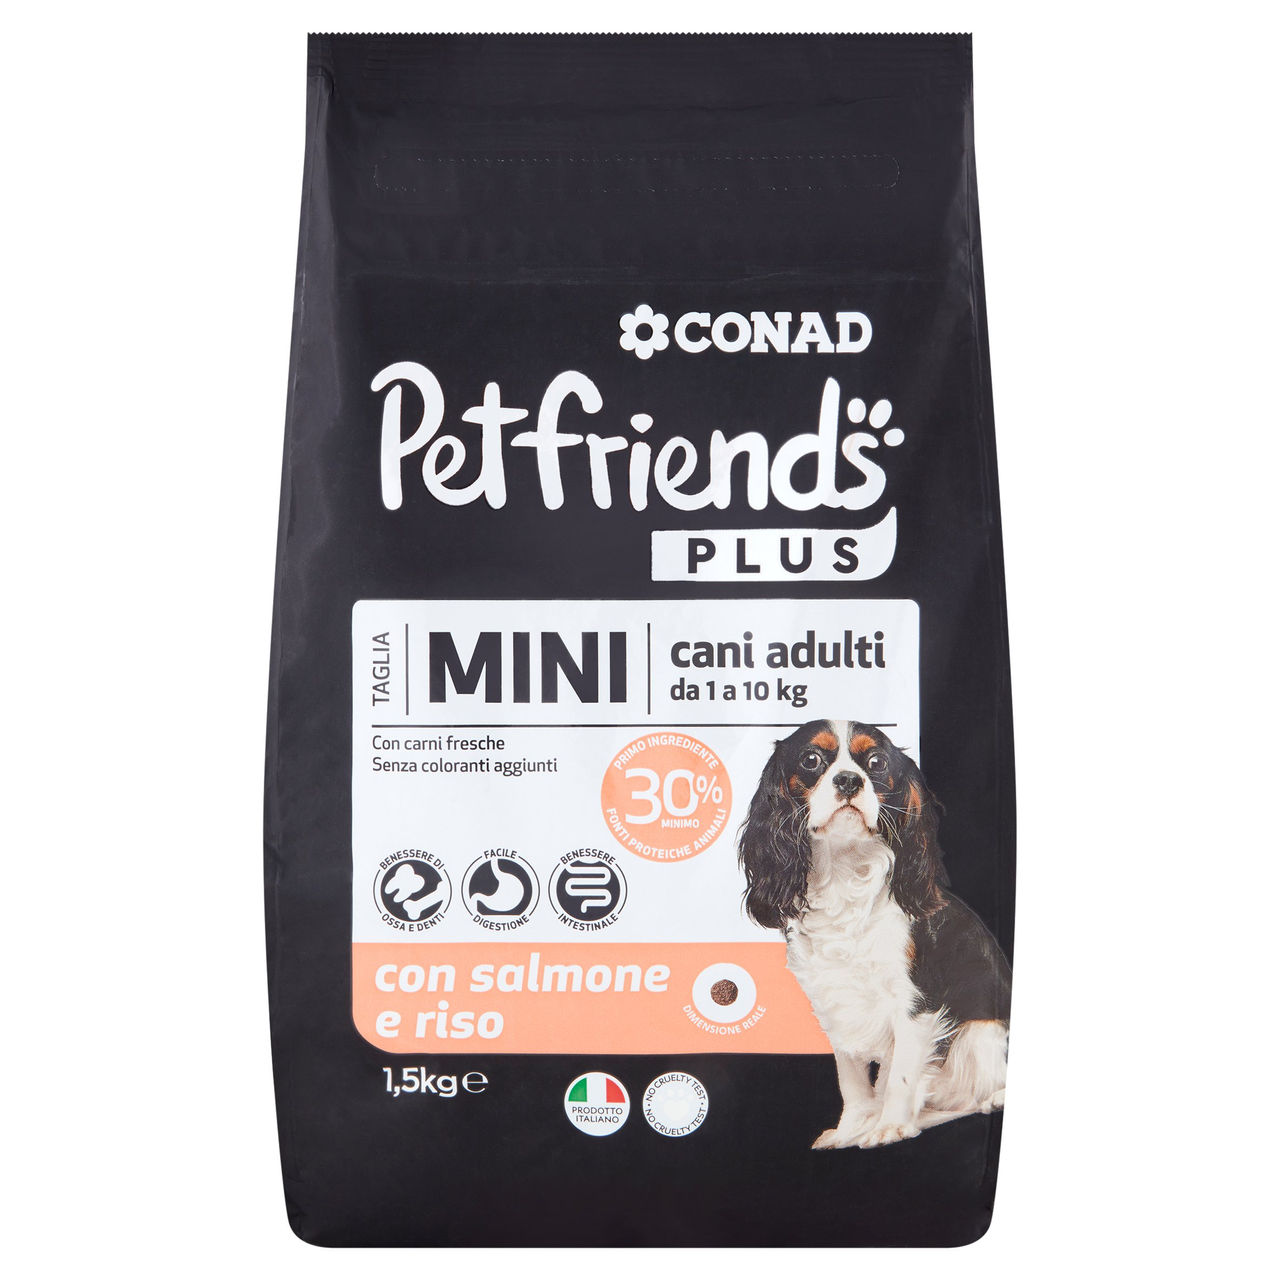 Petfriends Plus cani mini Conad in vendita online